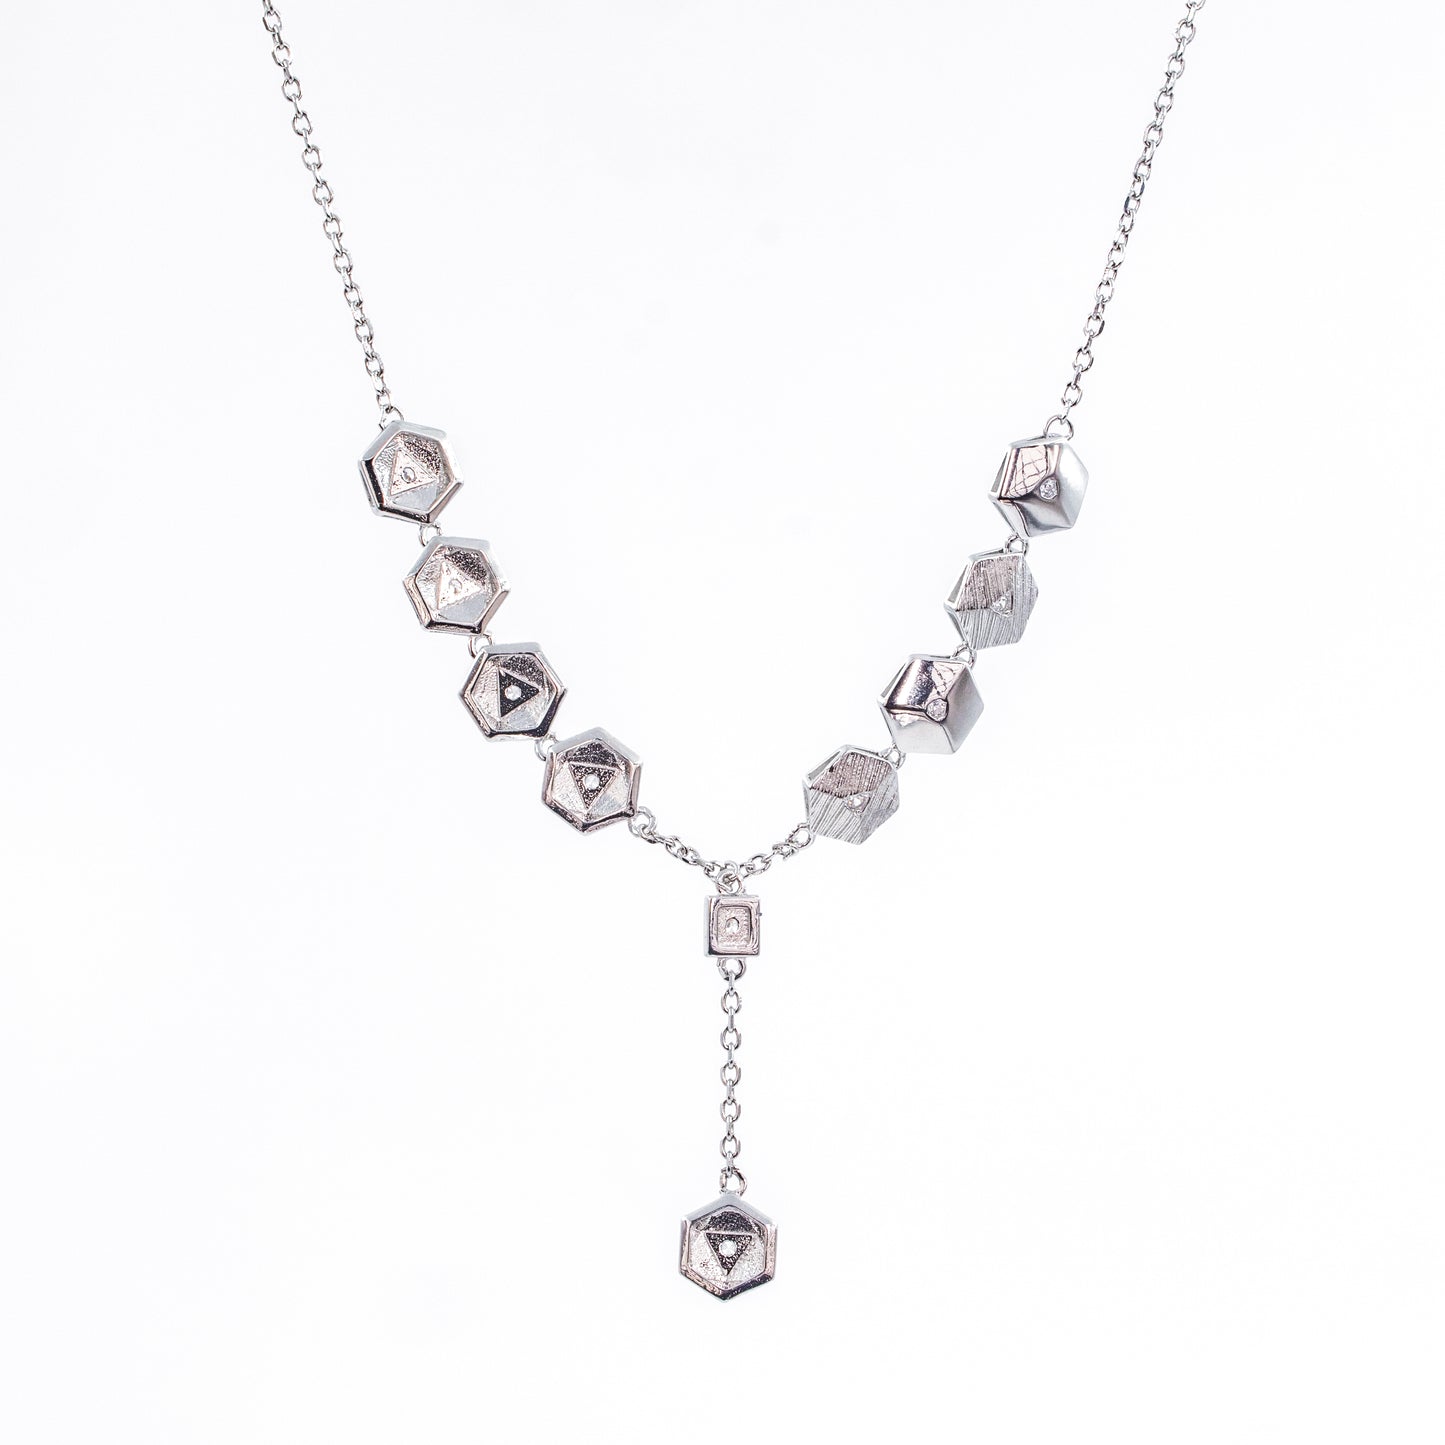 Silver Hexagonal Necklace Chain Pendant